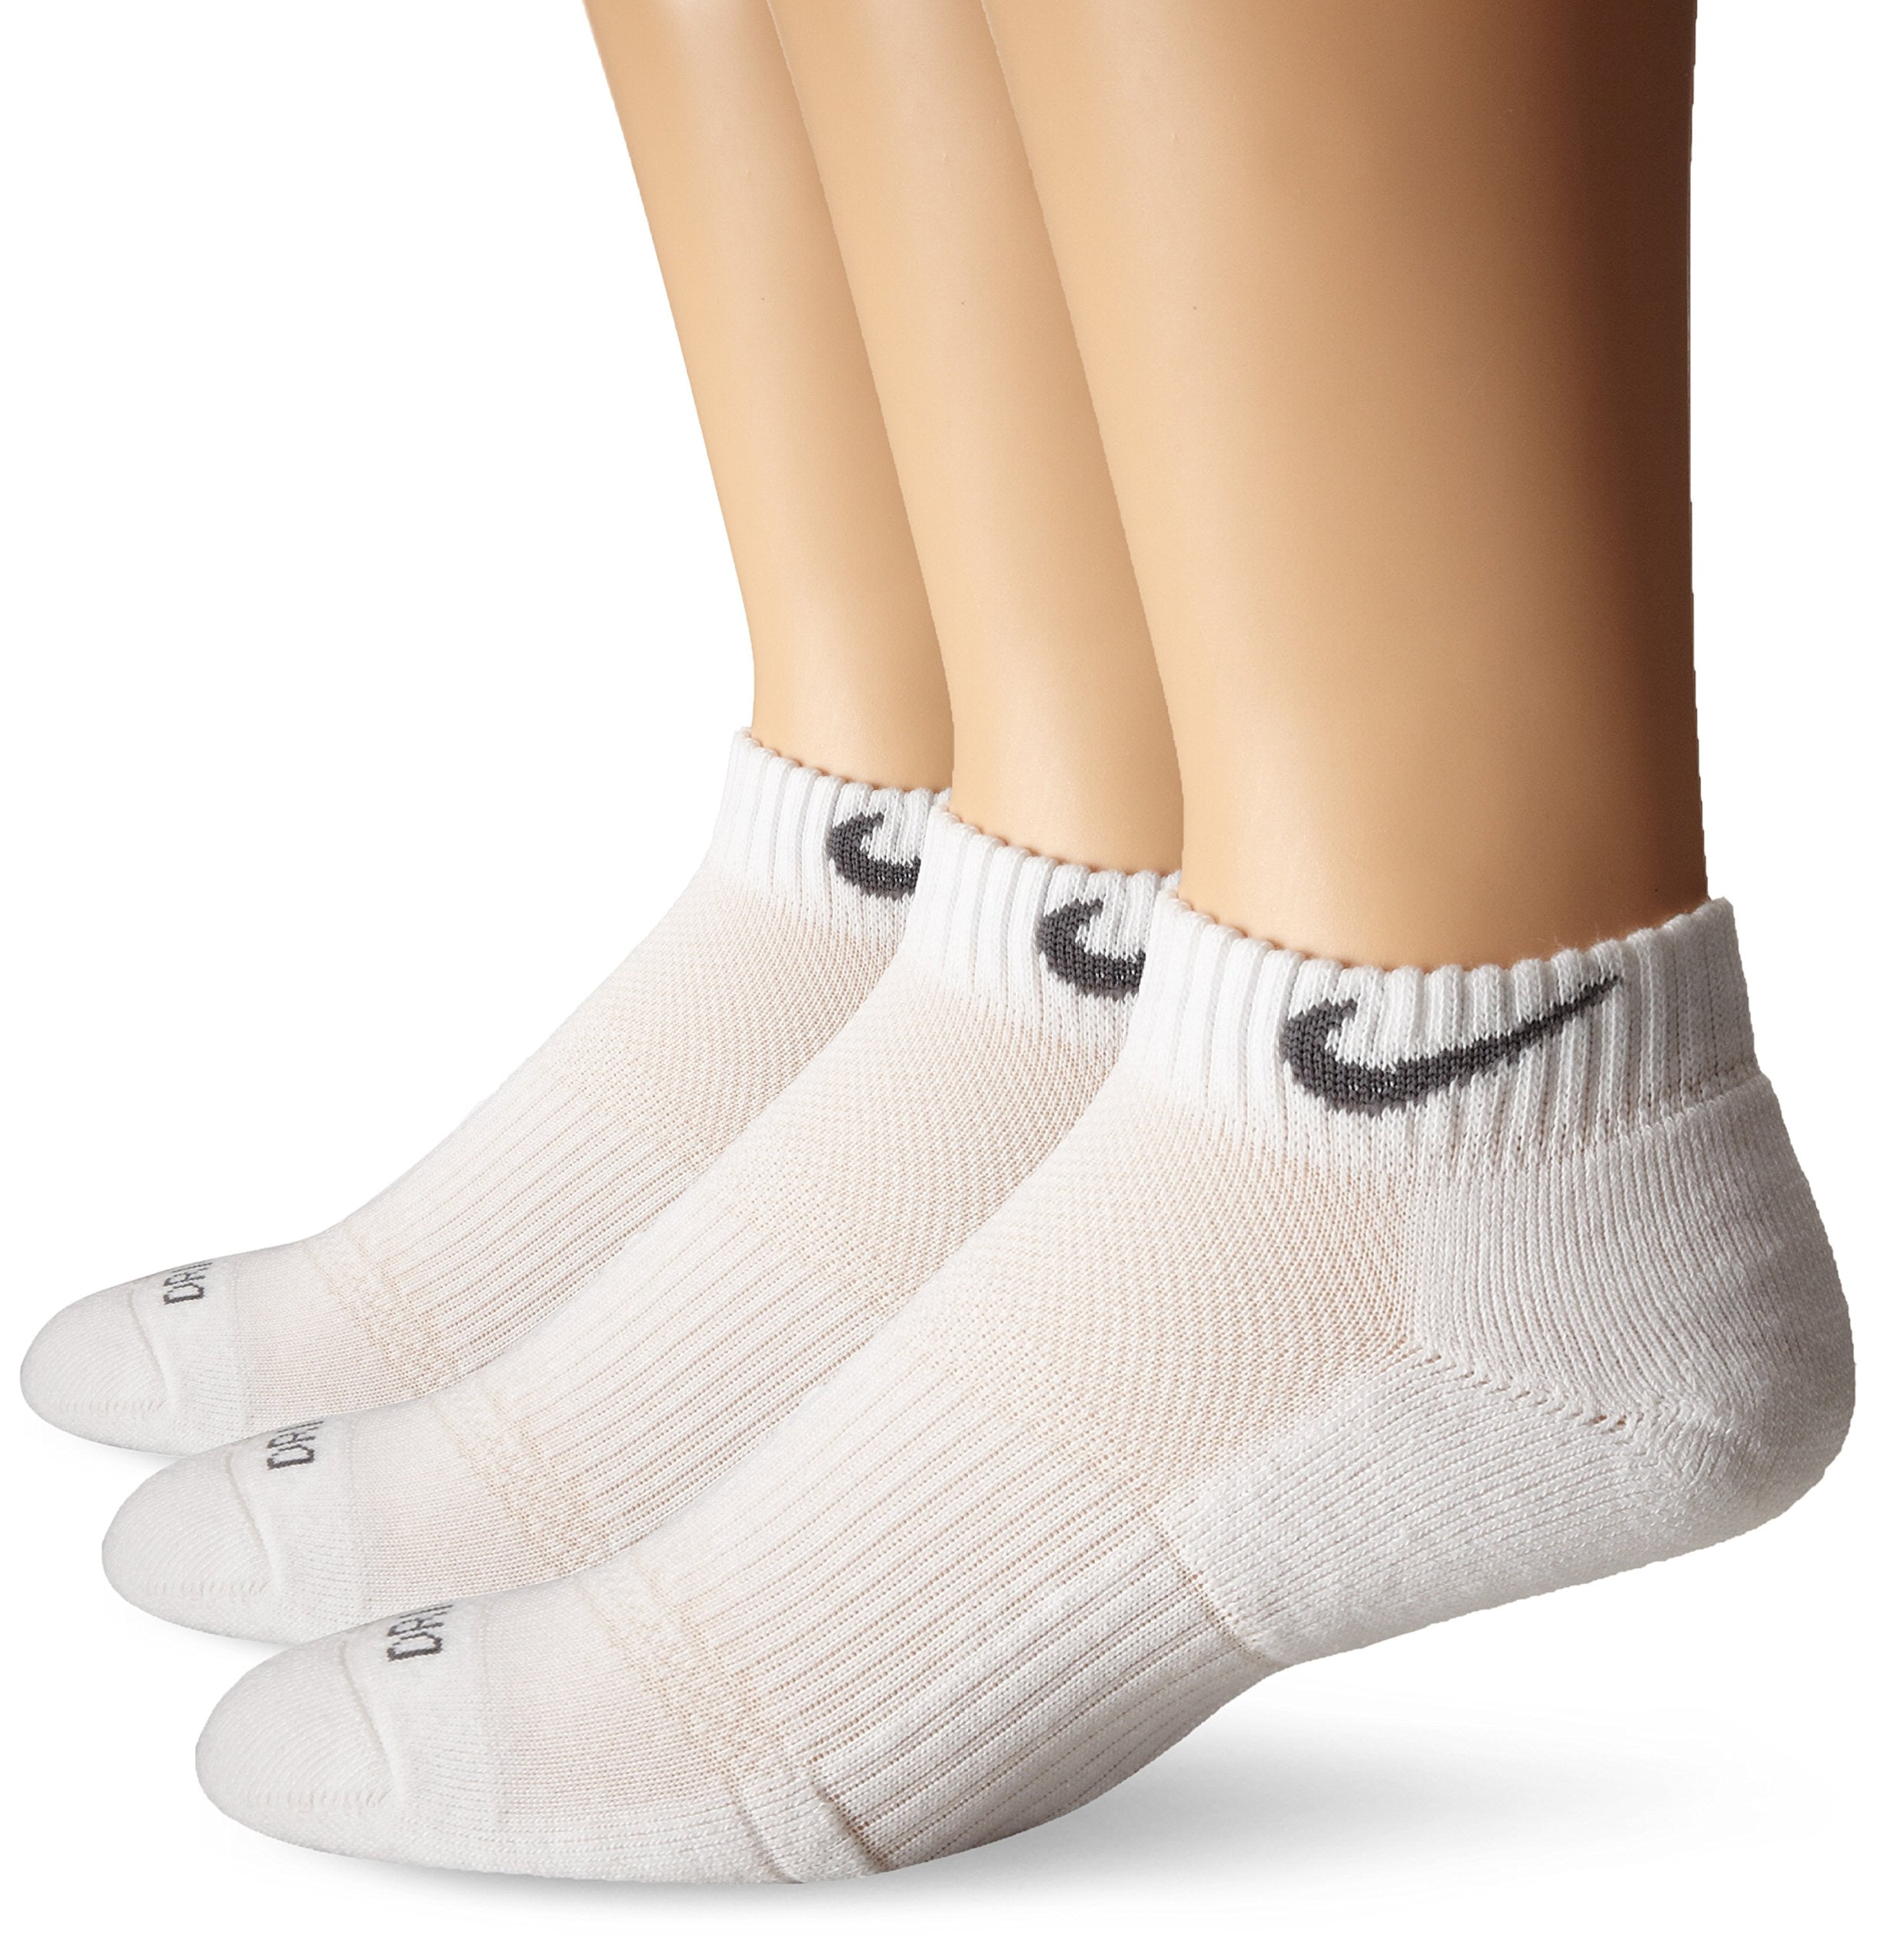 Next Right Dream - Dream socks, white low-cut